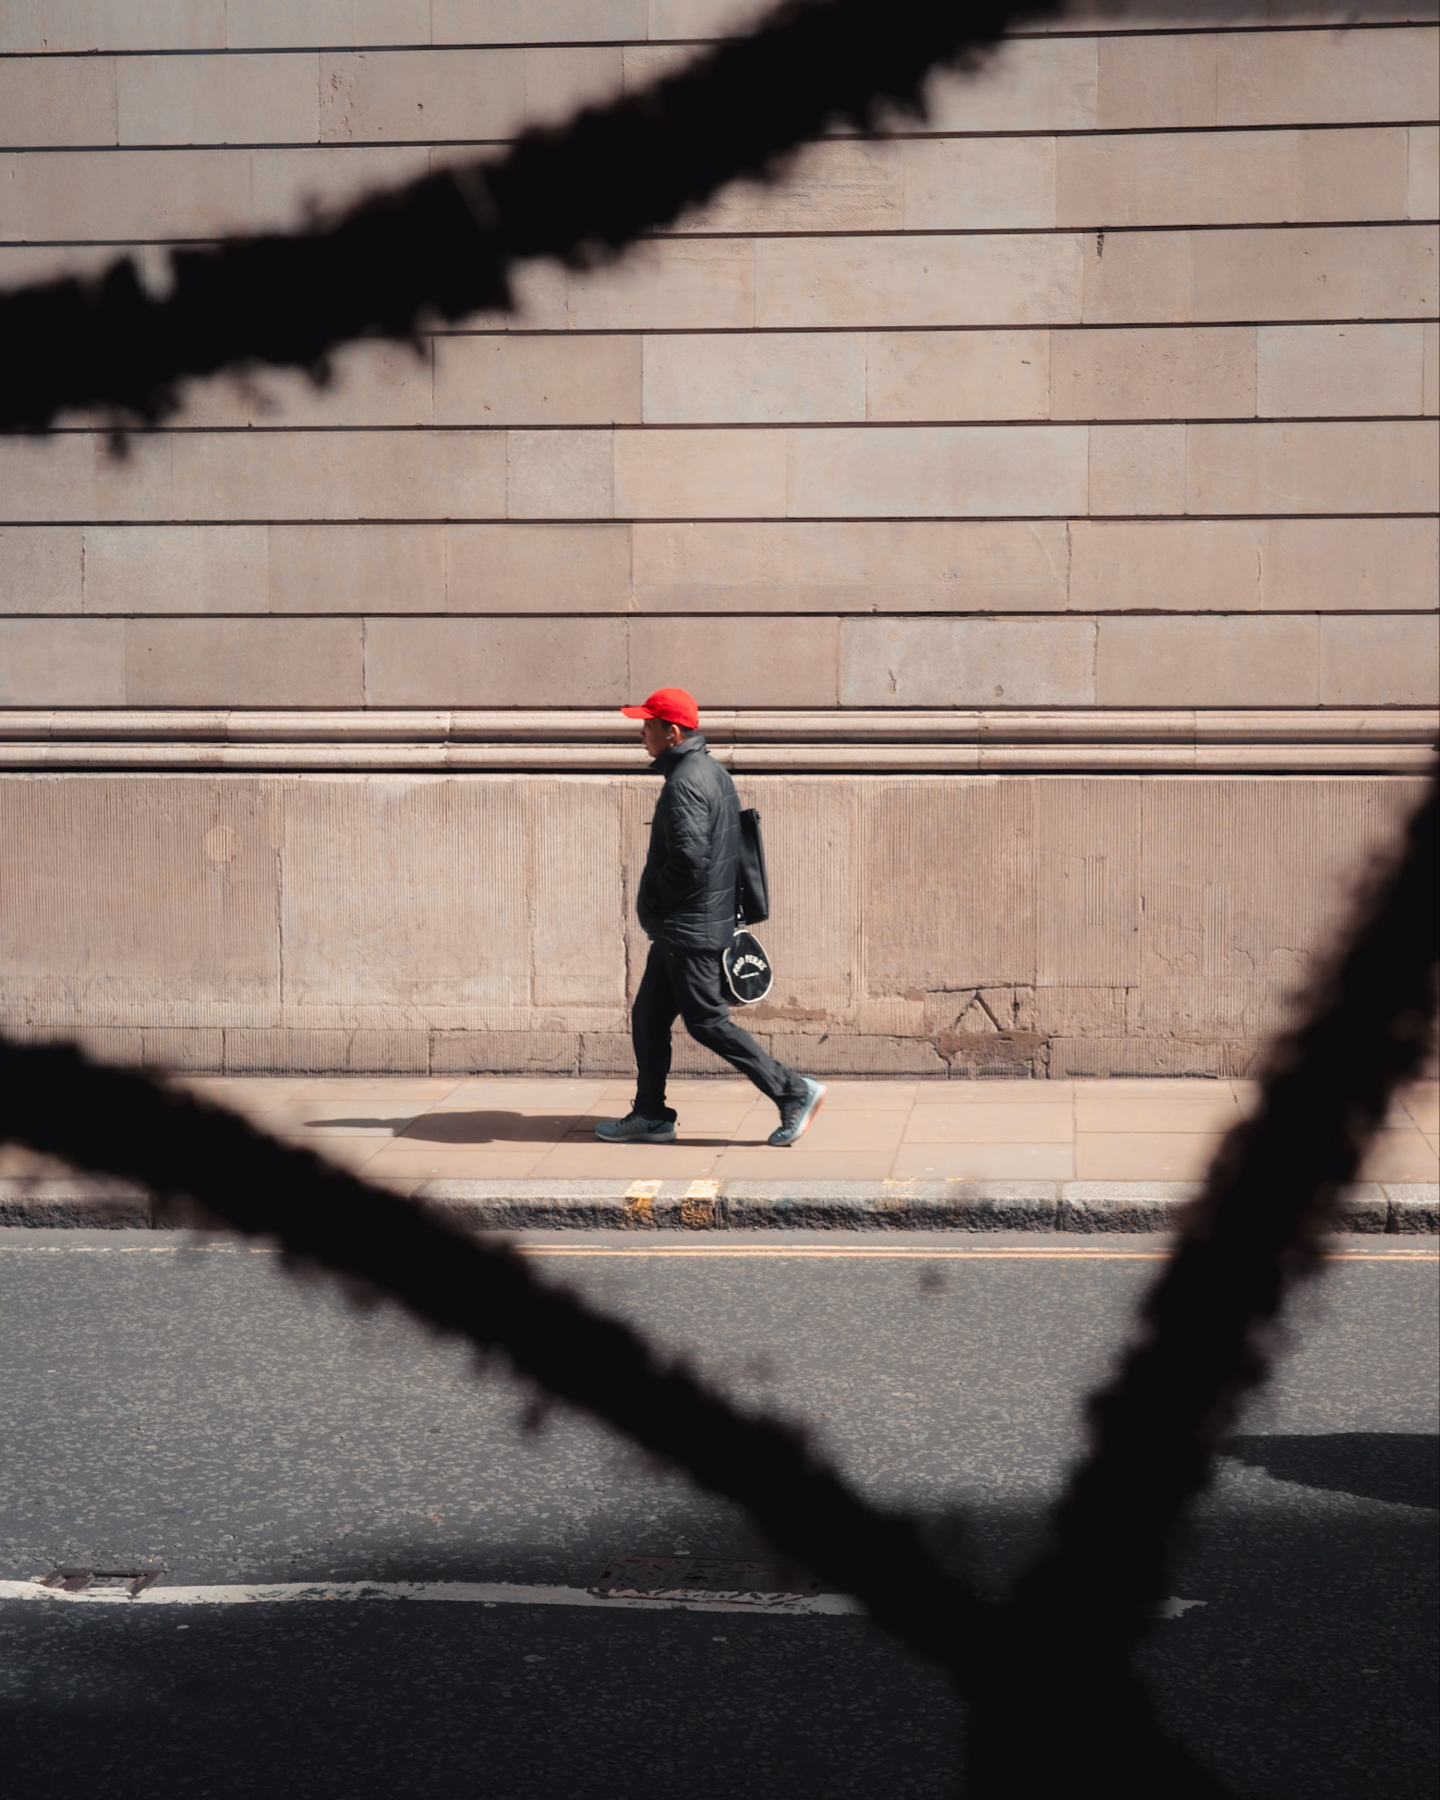 a man wearing a red hat shot through a gap in graffiti